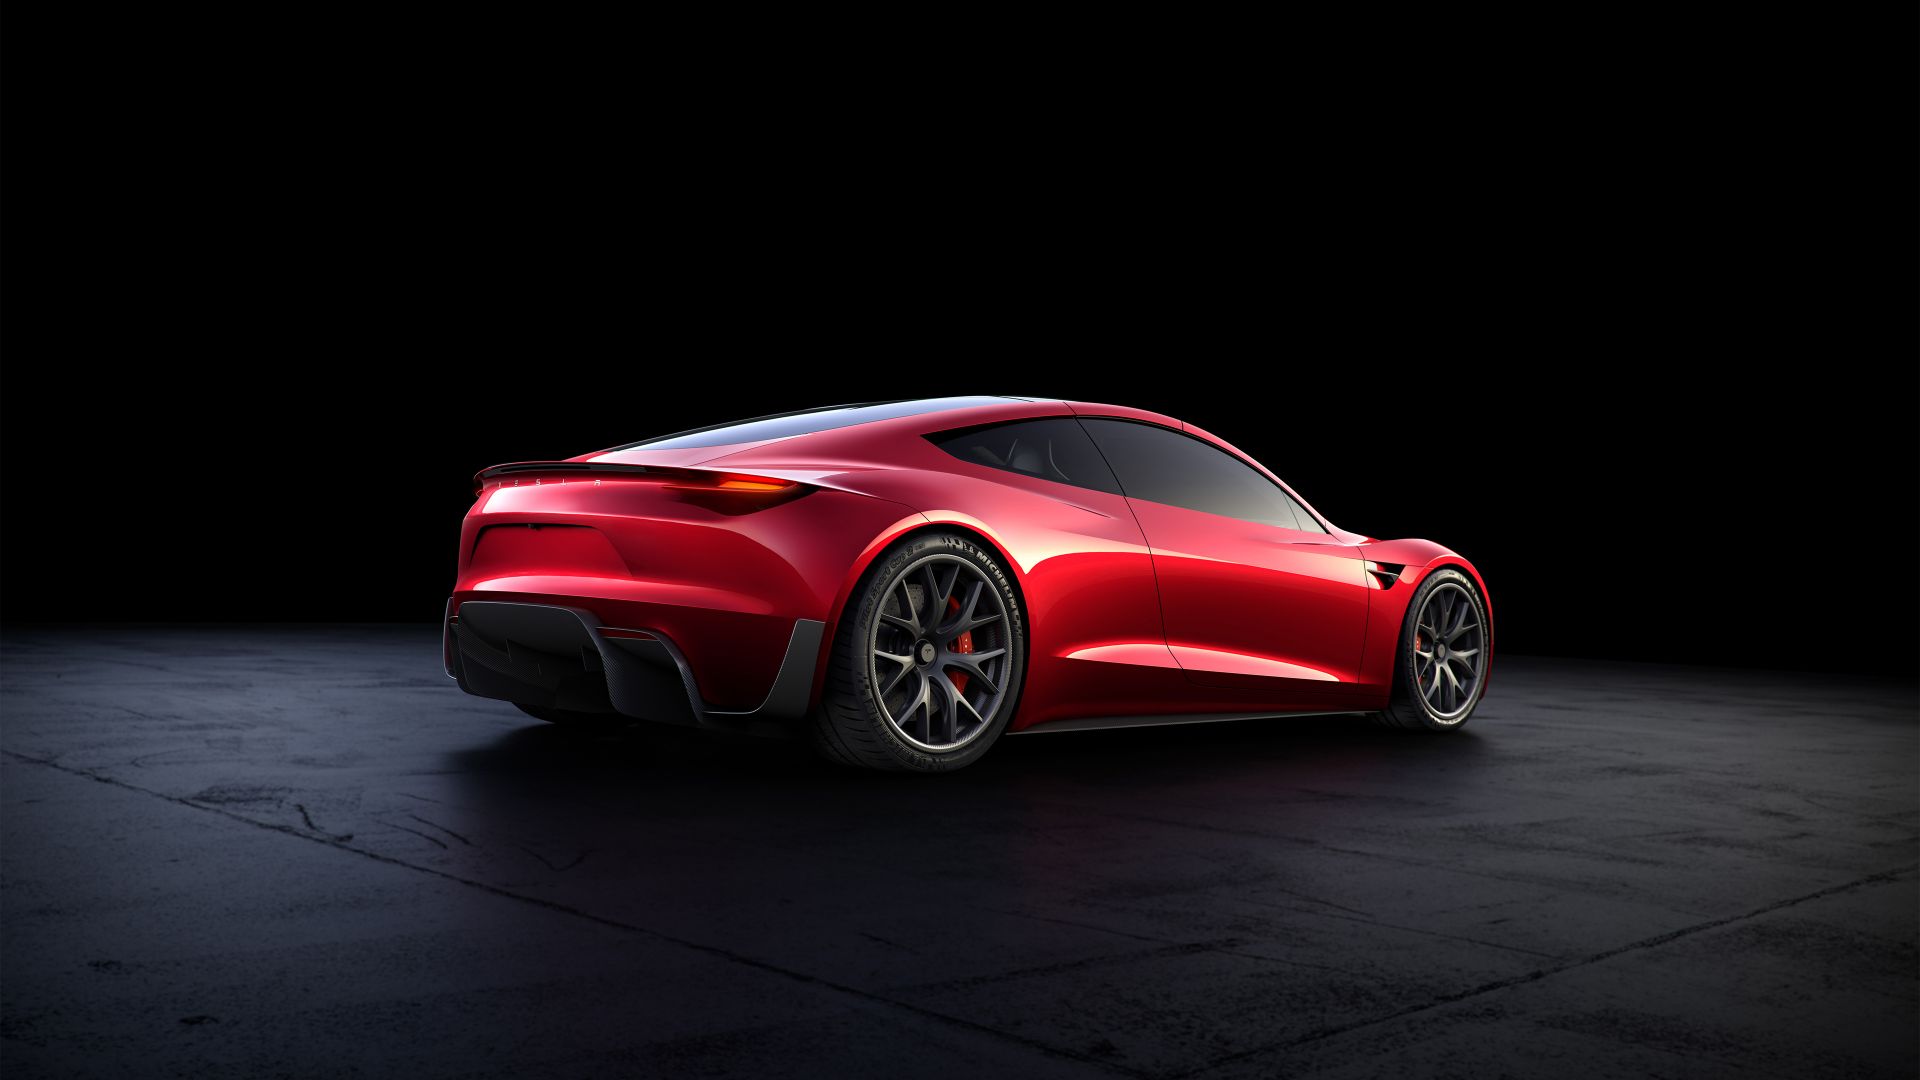 Wallpaper Tesla roadster, red car, rear view, 4k